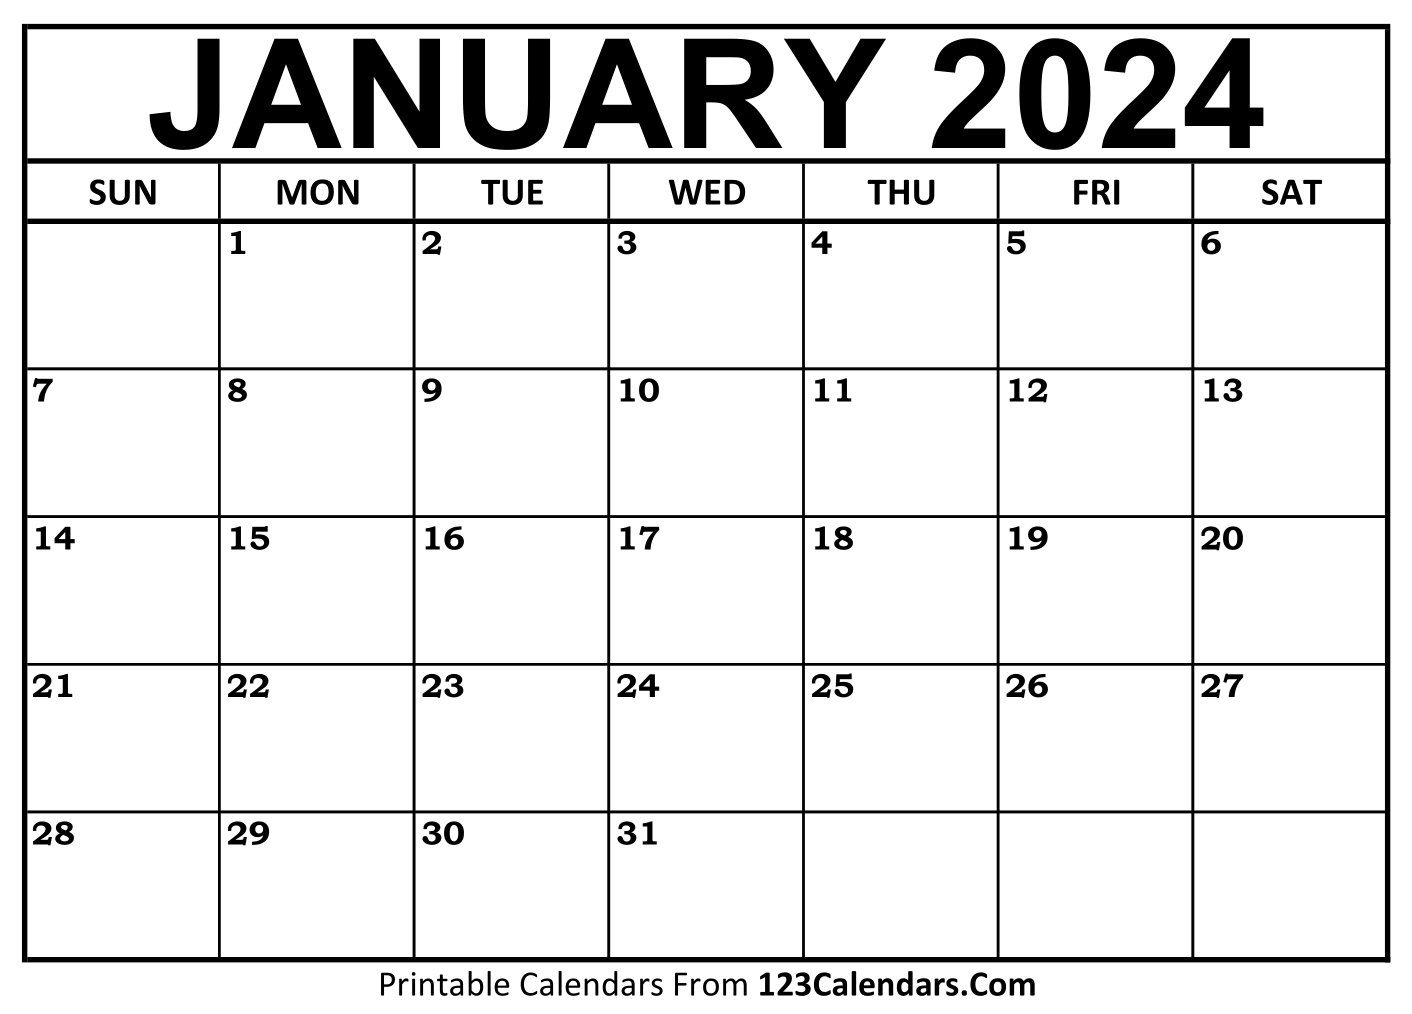 Printable January 2024 Calendar Templates - 123Calendars | Printable Monthly Calendar 2024